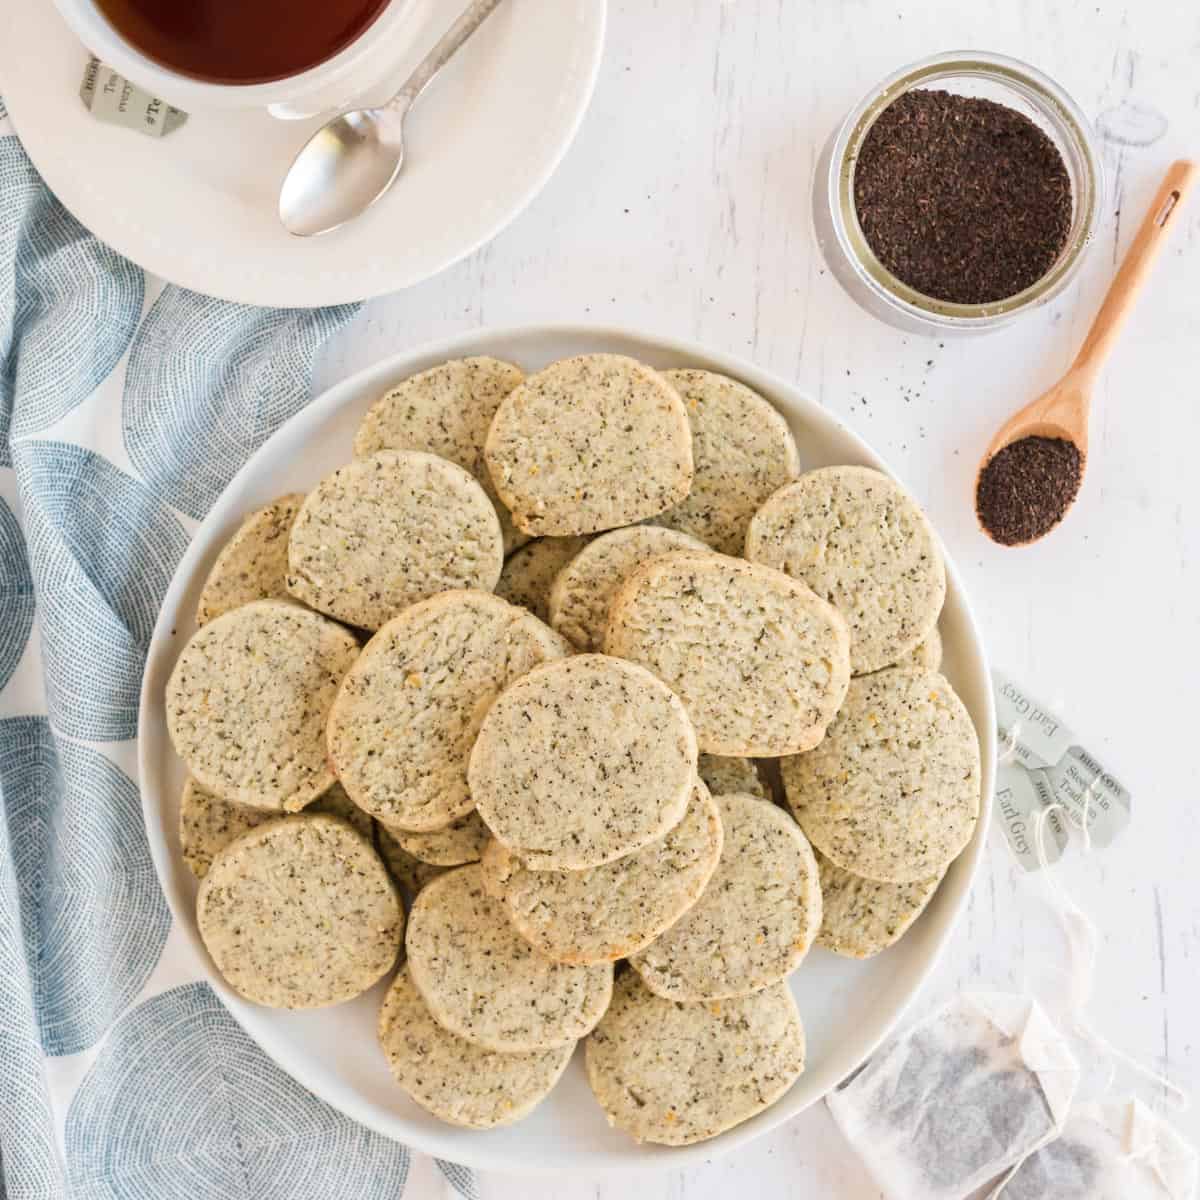 earl grey cookies on a plate